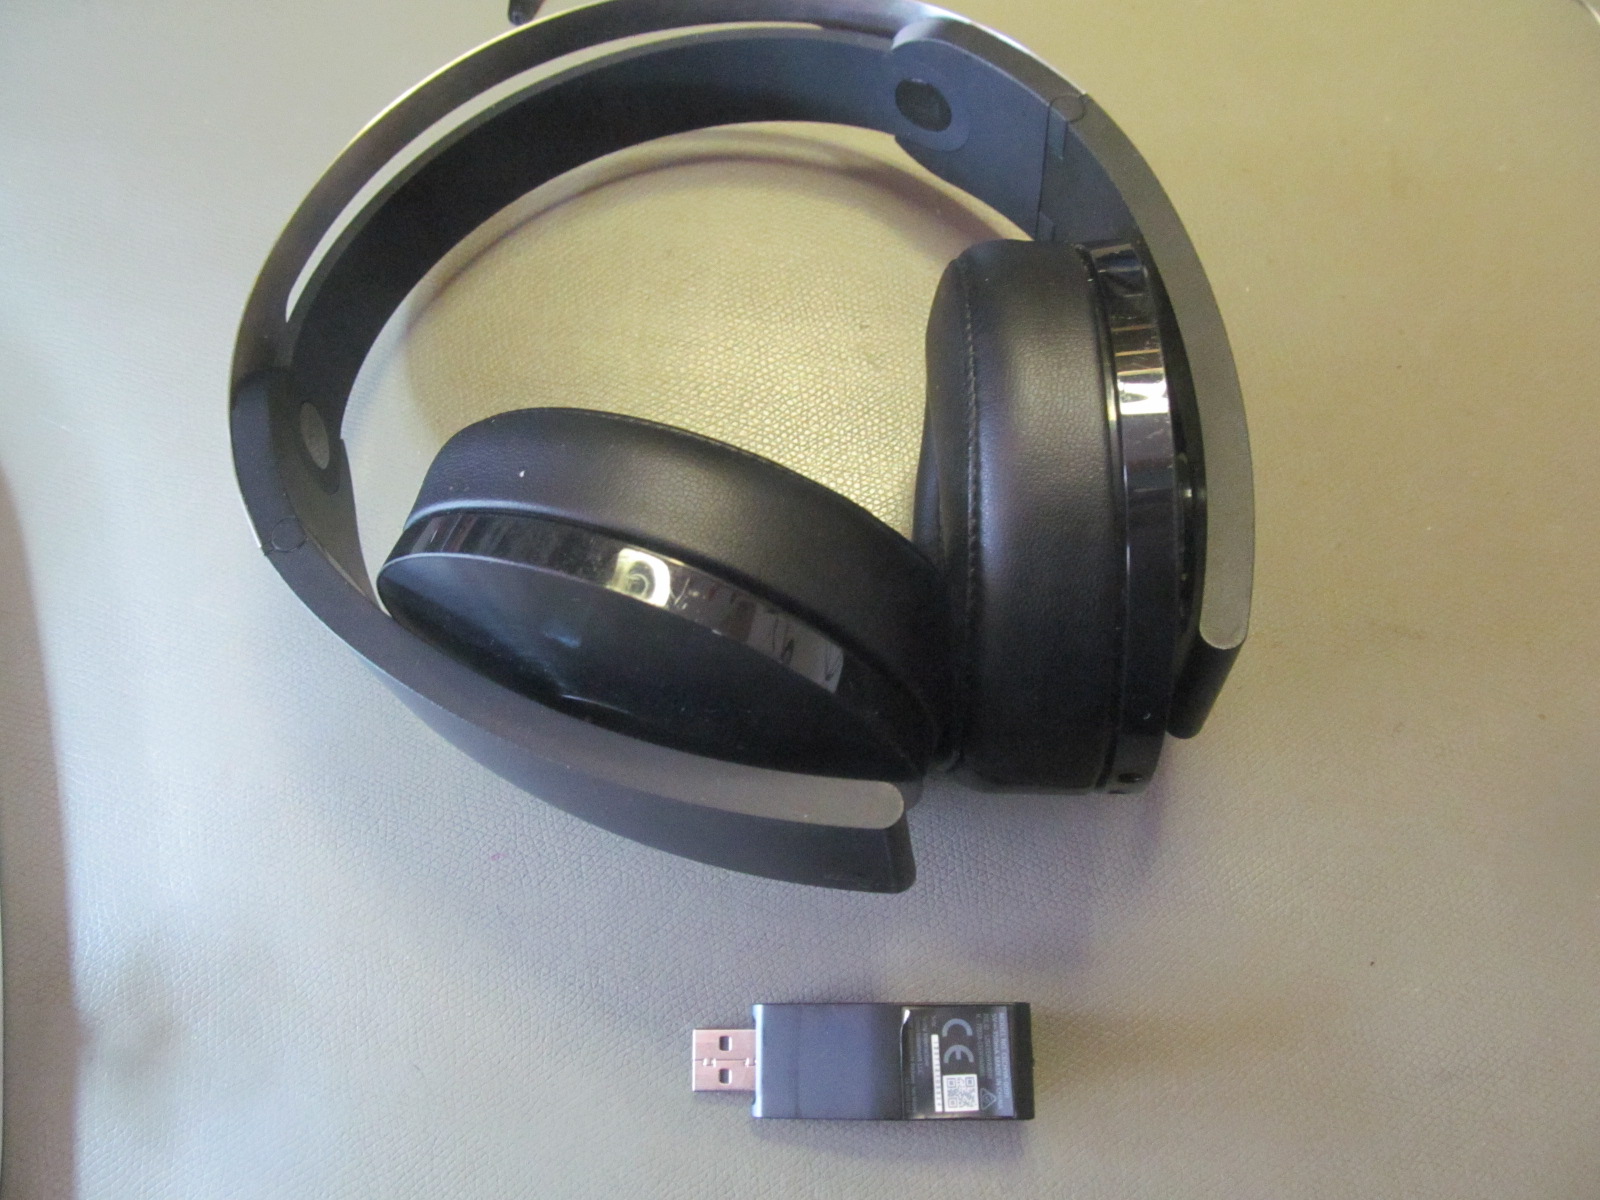 Sony PS4 Headset repair